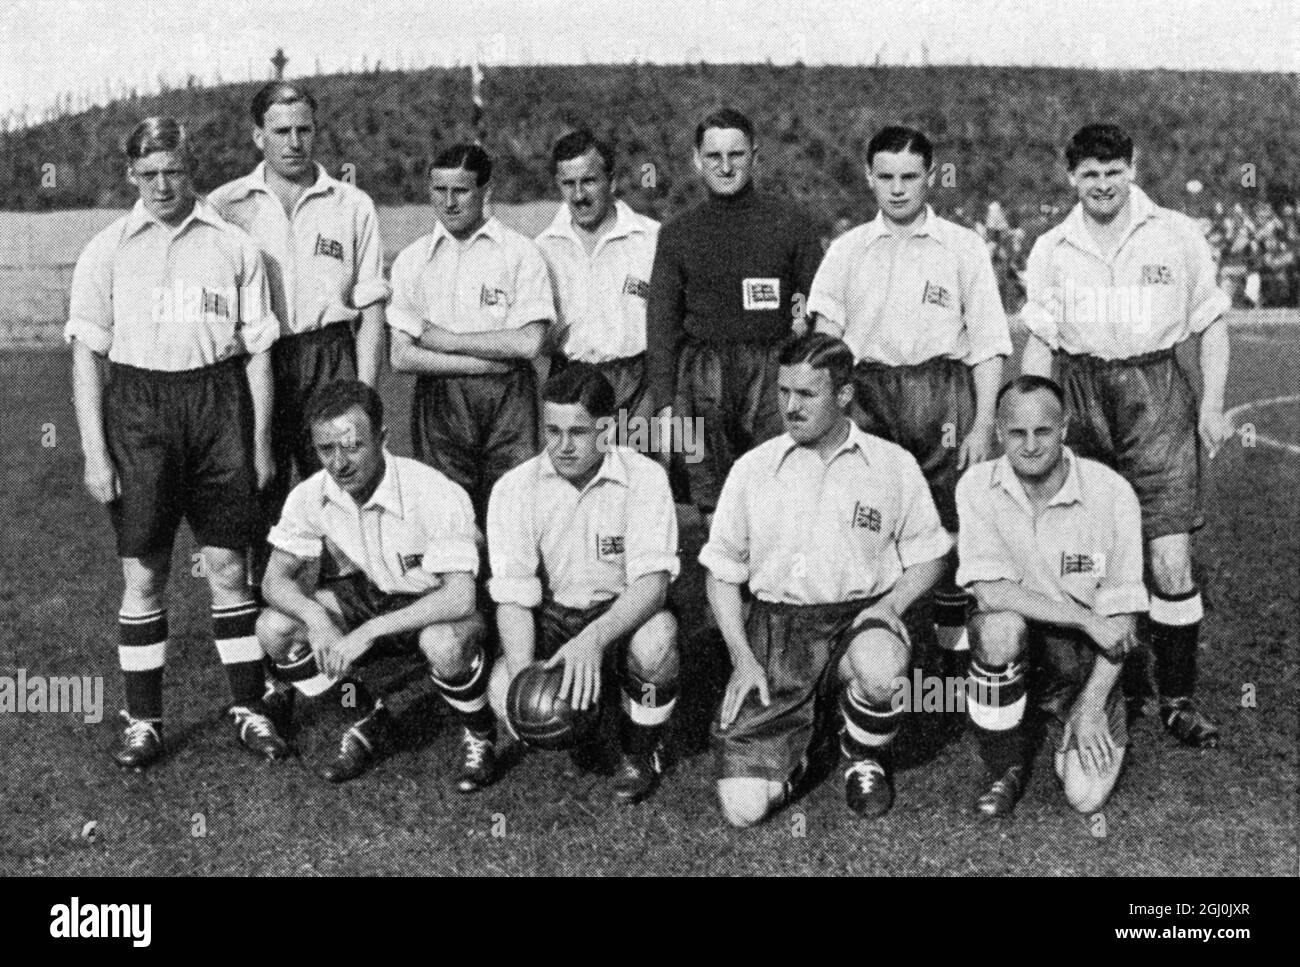 Jeux Olympiques de 1936, Berlin - équipes de football du monde entier - Grande-Bretagne Fussballmannschaften aus aller Welt - GROSSBRITANNIEN ©TopFoto Banque D'Images